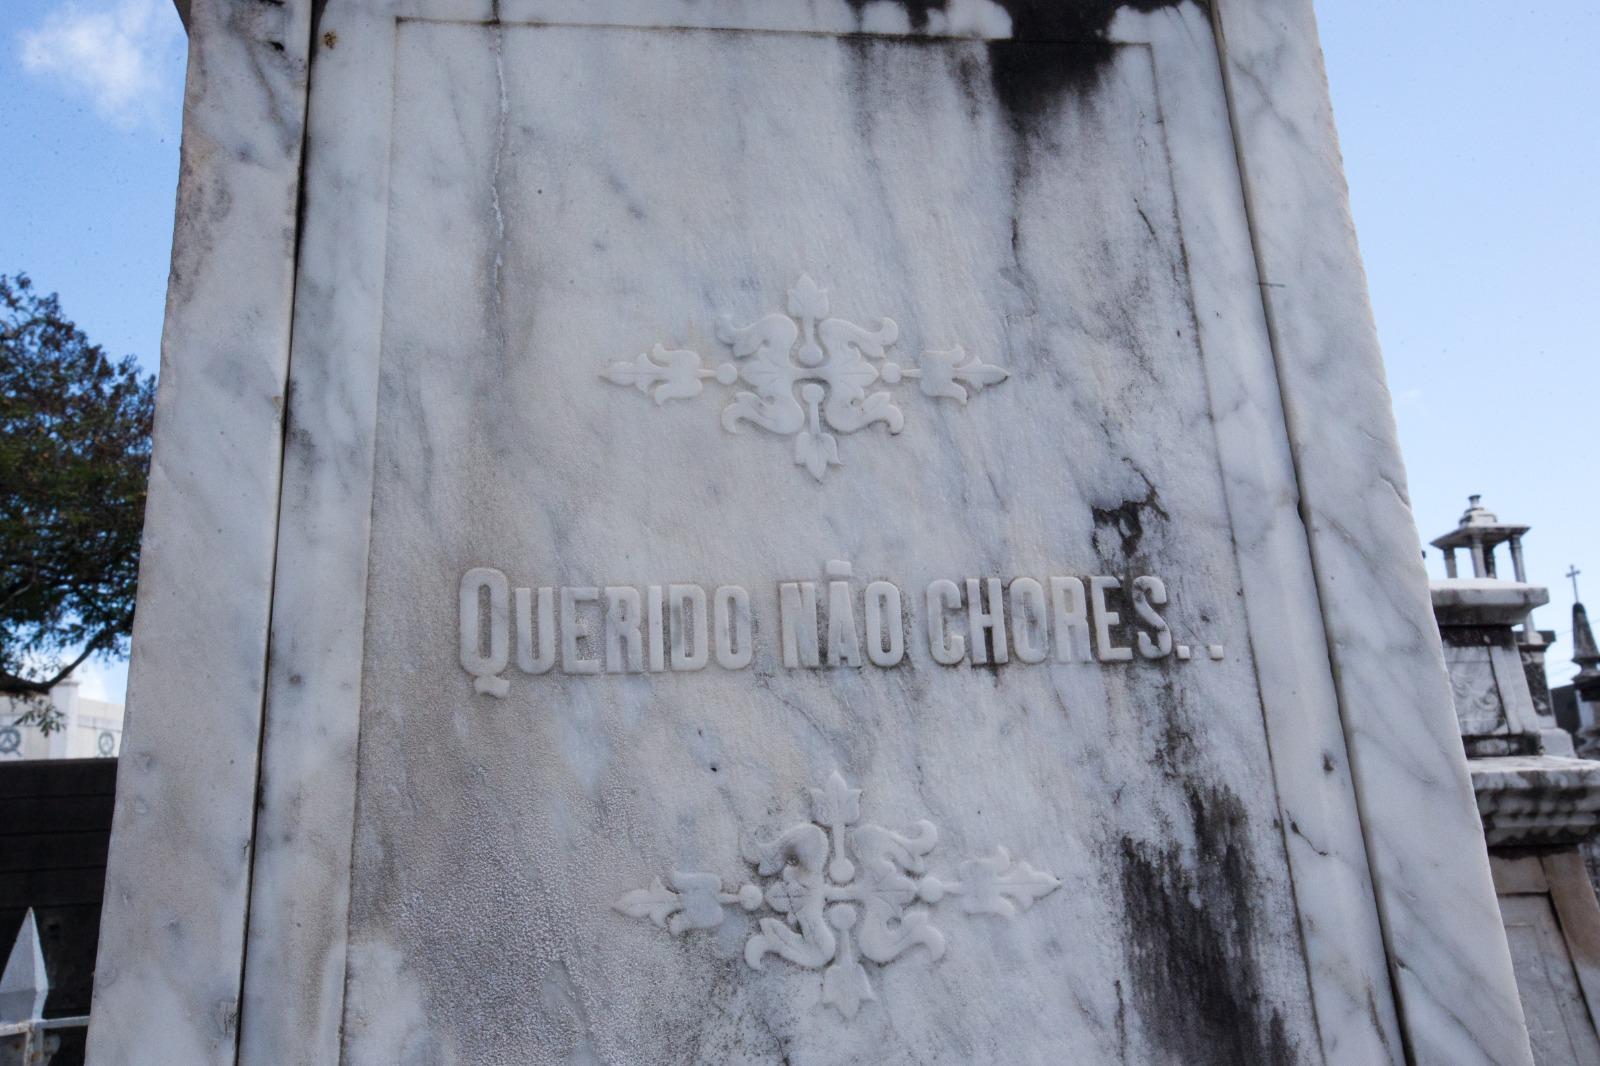 Frases esculpidas no túmulo remontam as últimas palavras de Arina Castello Branco